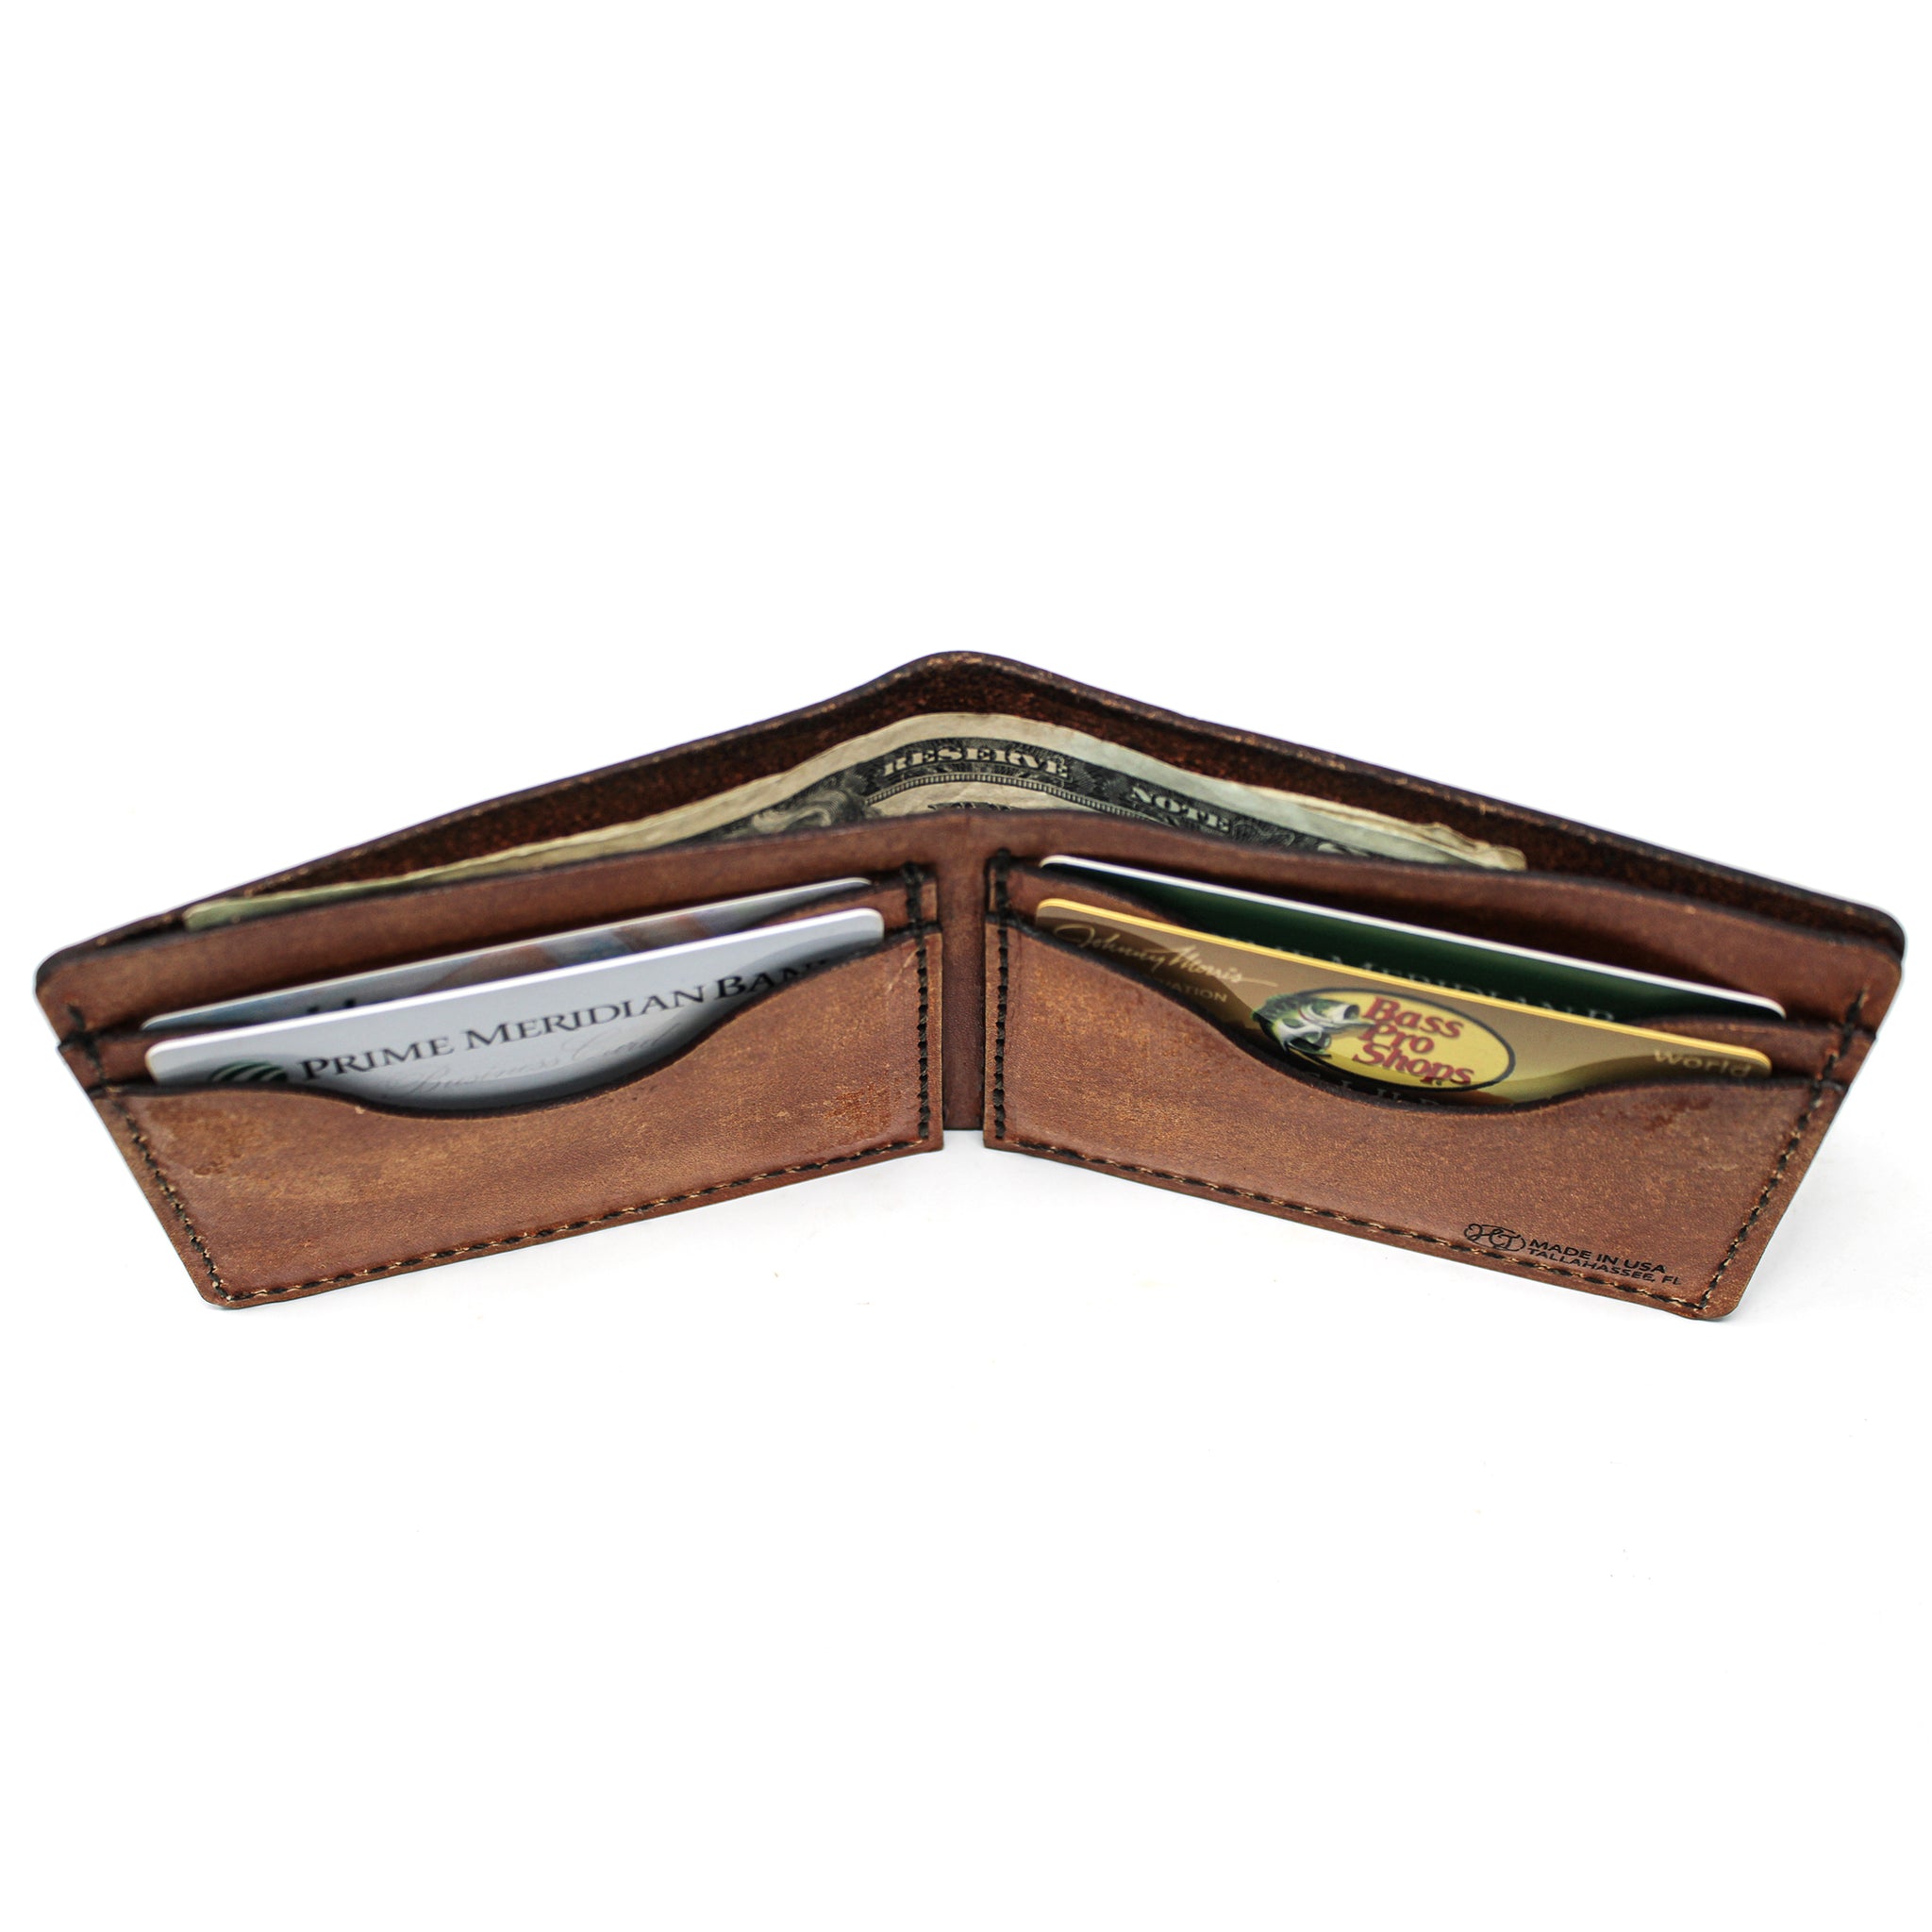 Leather Bill Fold Wallet -  FSU Clean